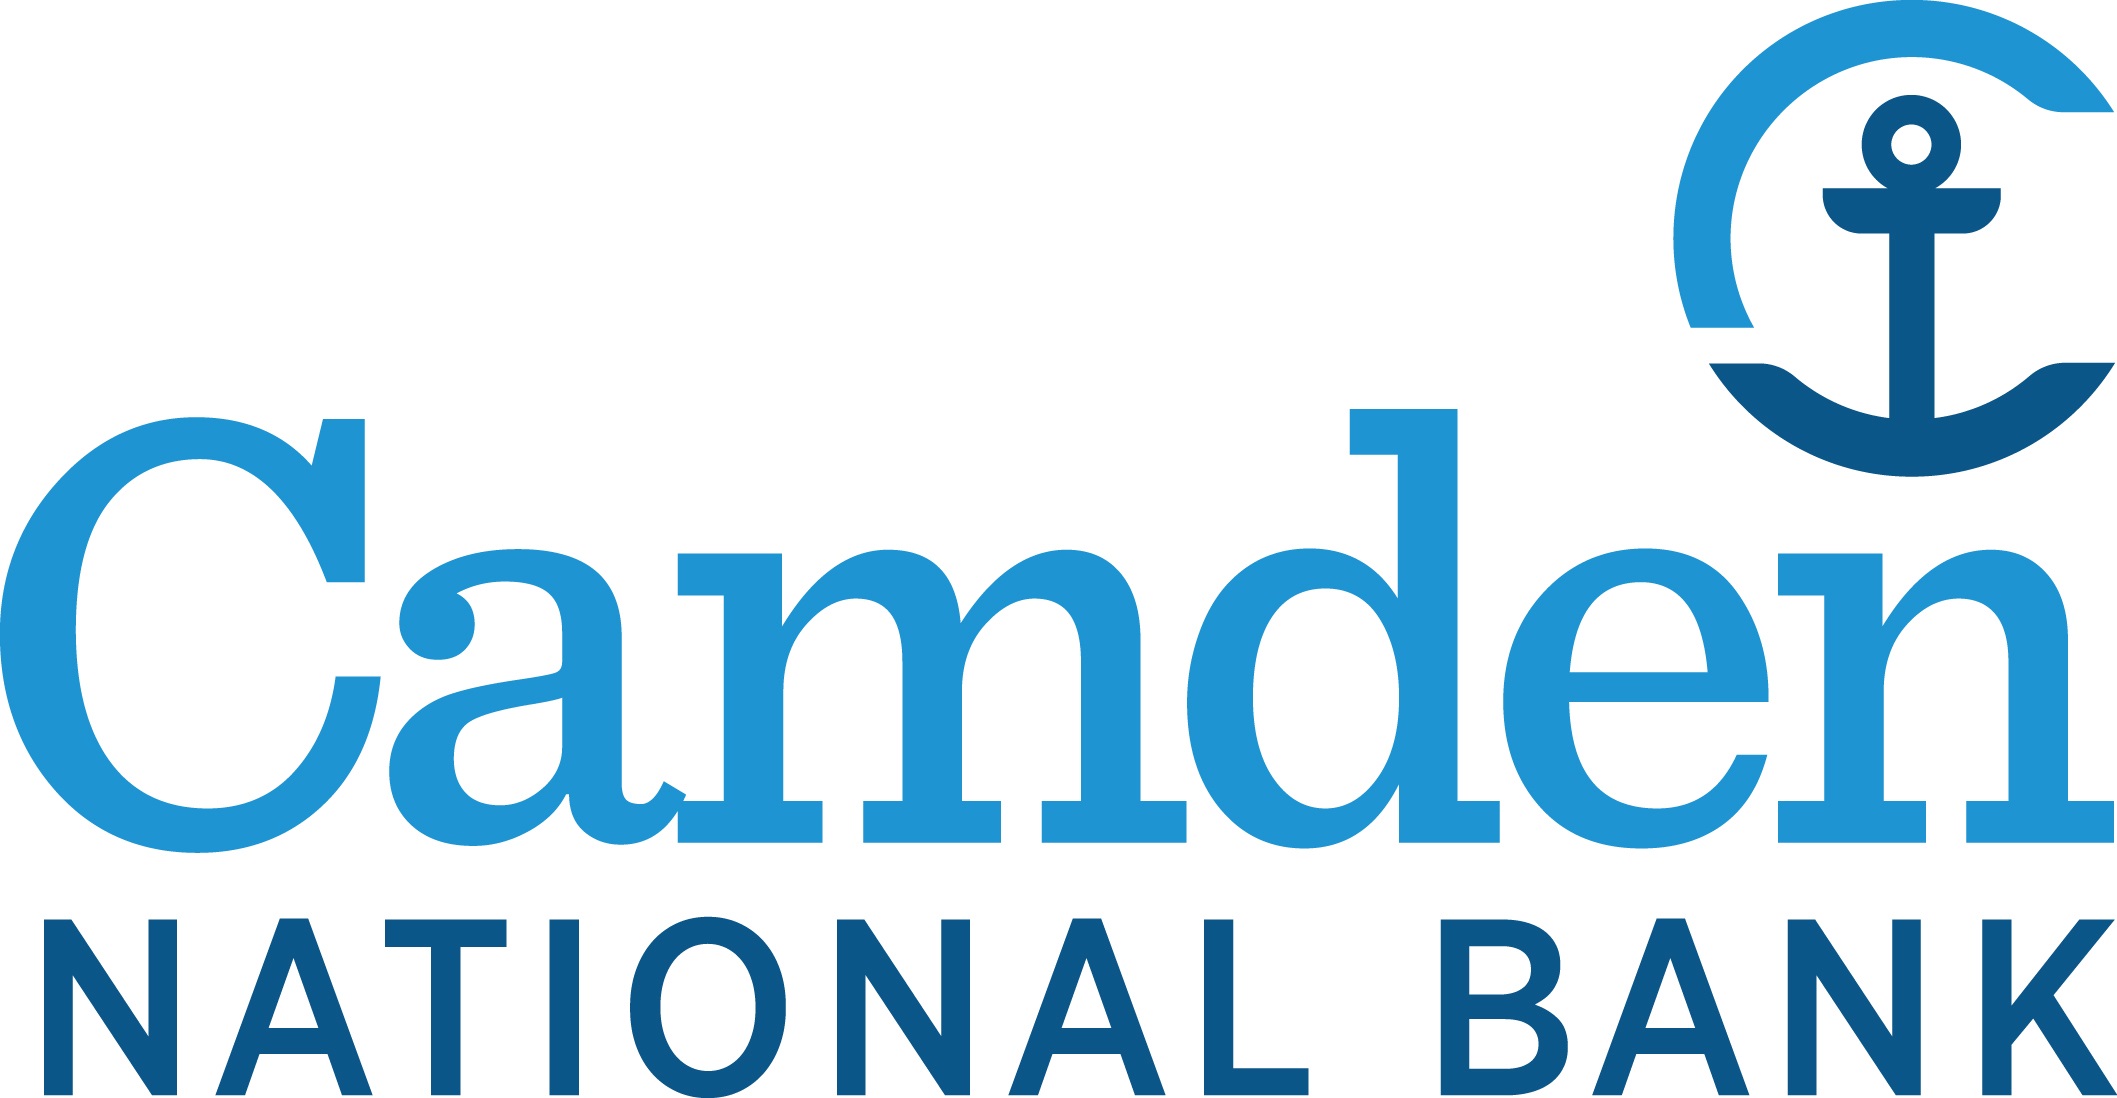 Camden National Bank 2022